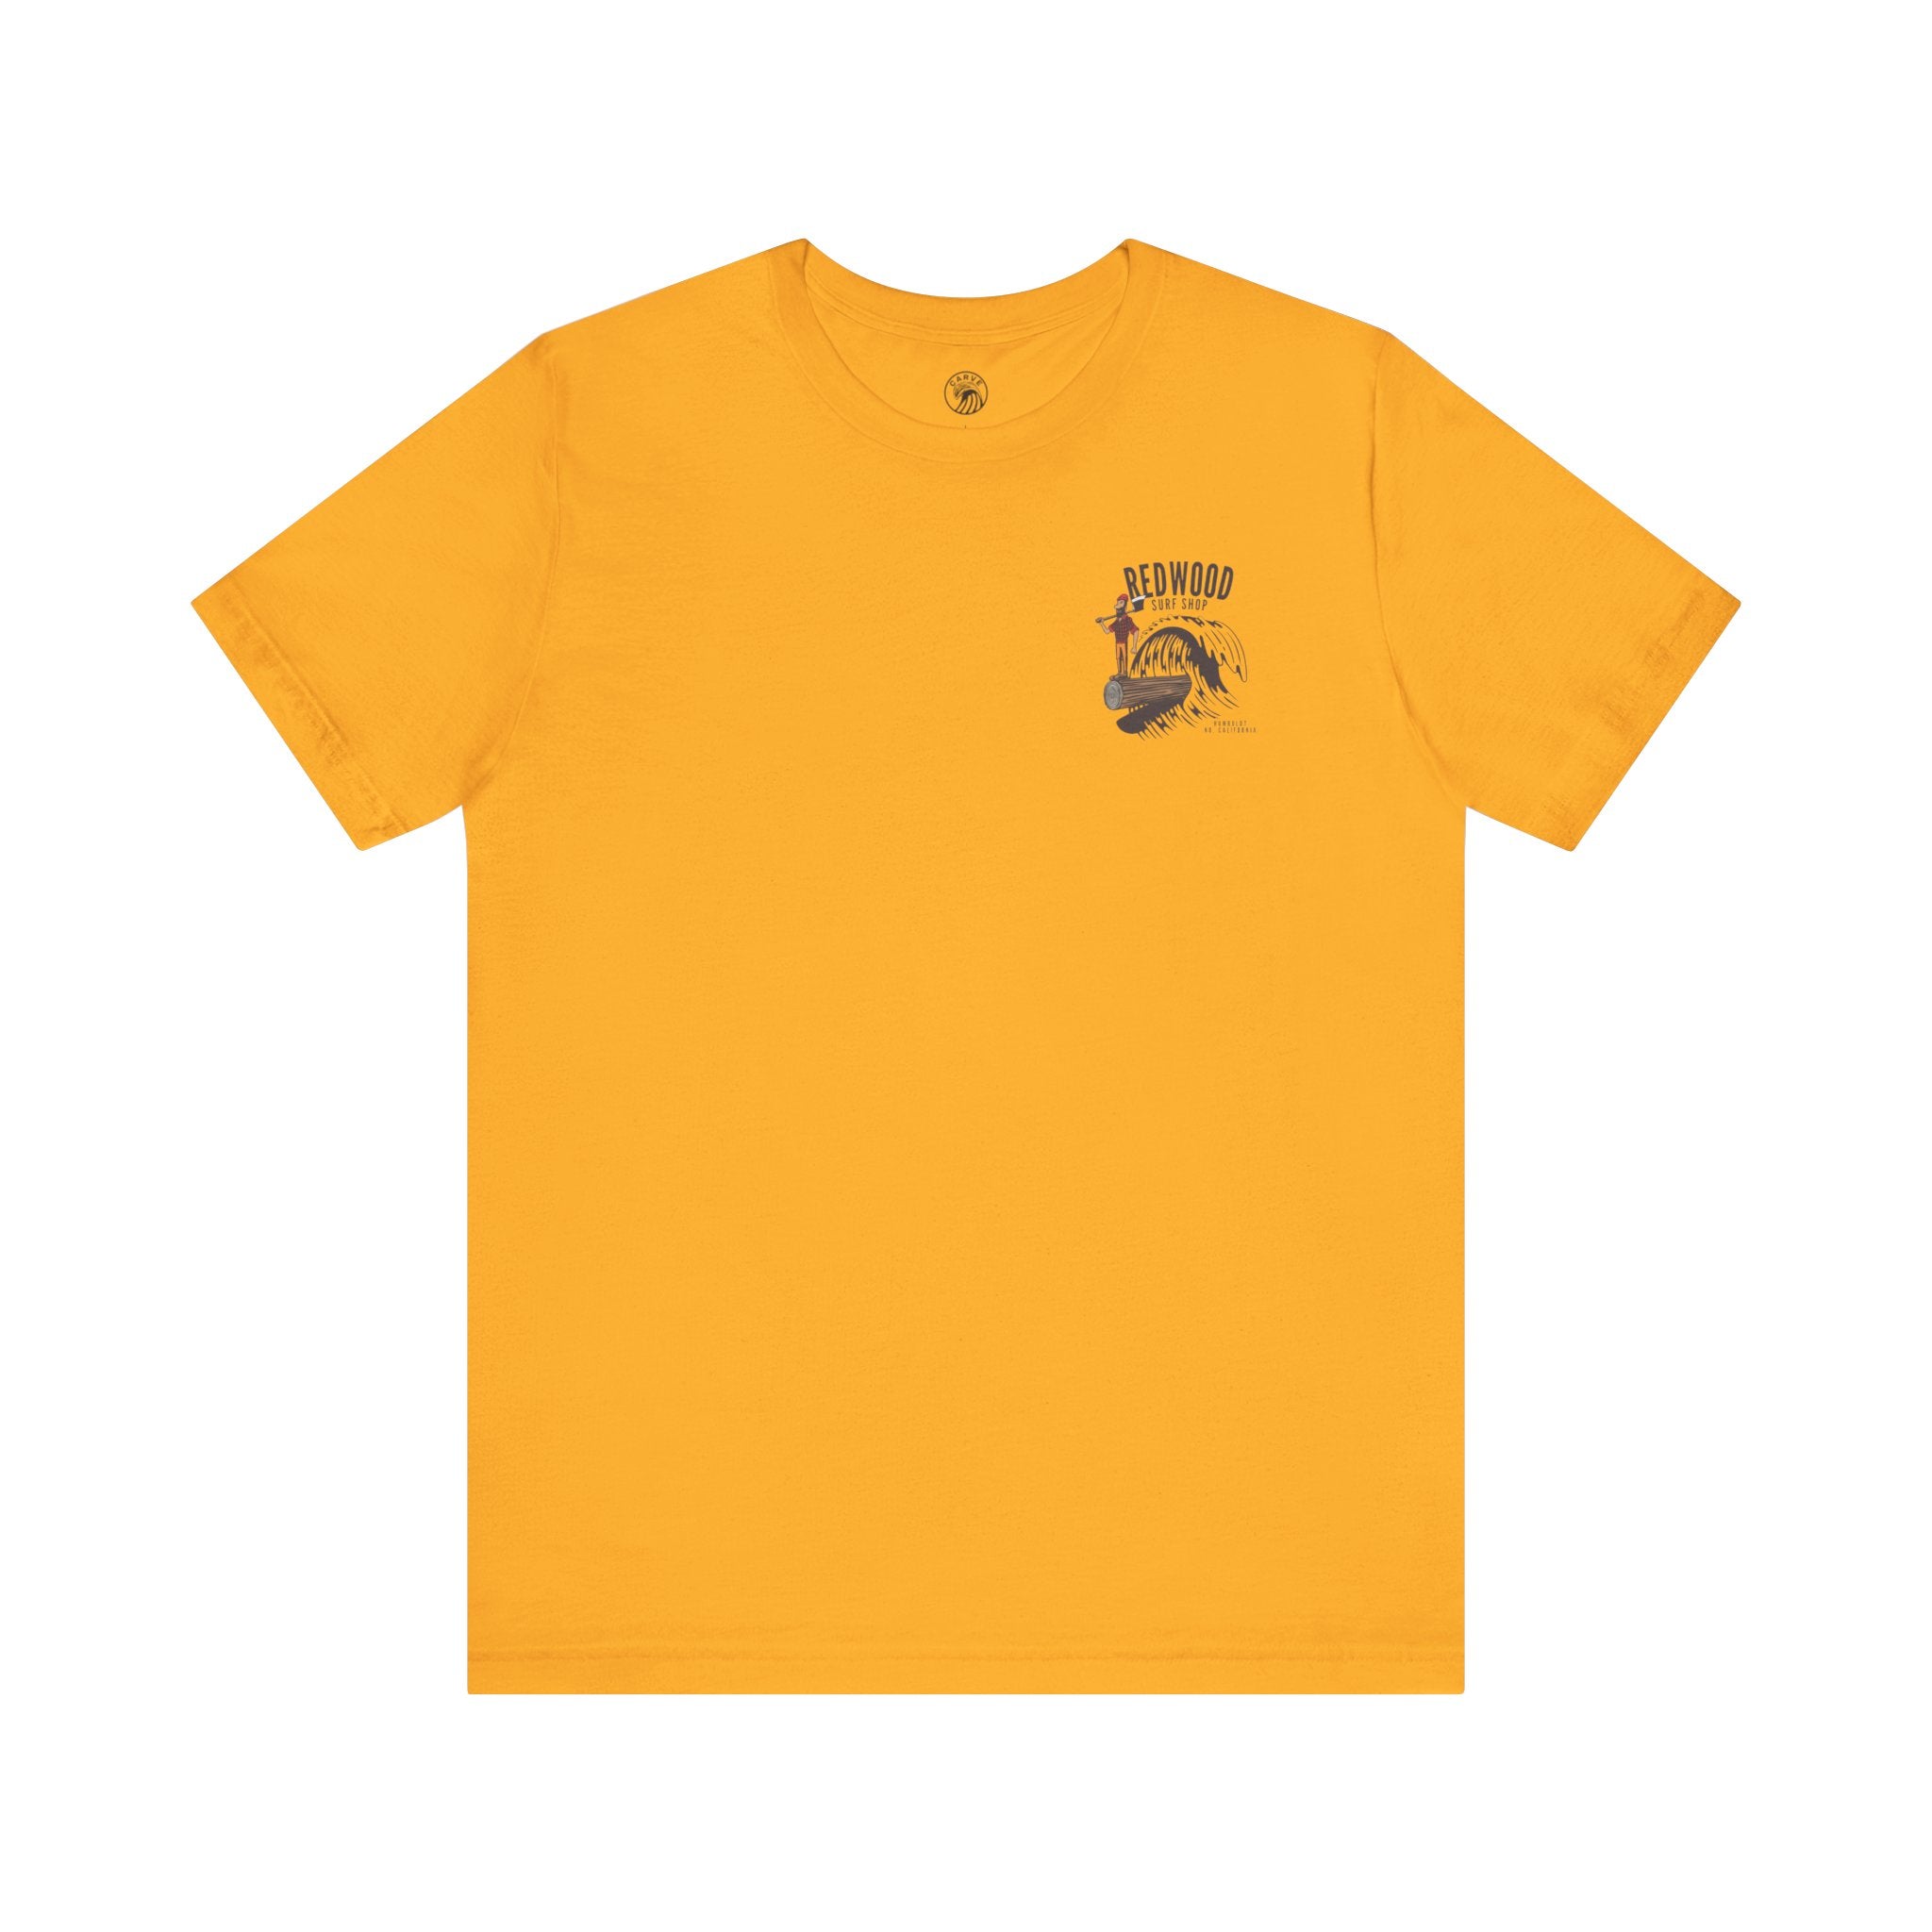 T-shirt: Redwood Surf Shop